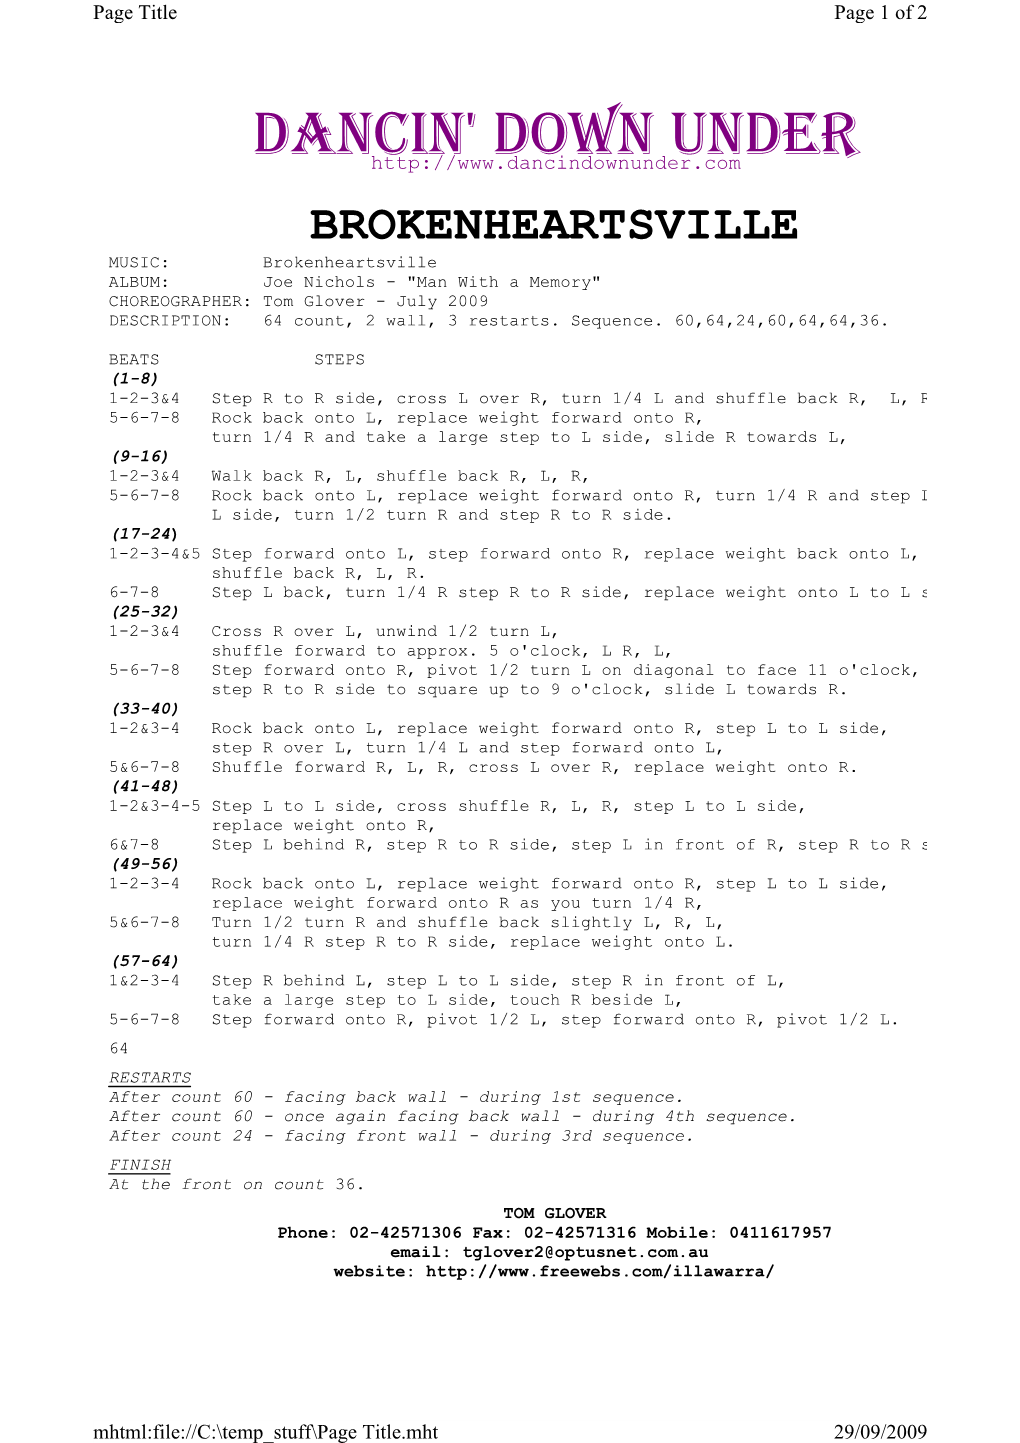 BROKENHEARTSVILLE MUSIC: Brokenheartsville ALBUM: Joe Nichols - "Man with a Memory" CHOREOGRAPHER: Tom Glover - July 2009 DESCRIPTION: 64 Count, 2 Wall, 3 Restarts